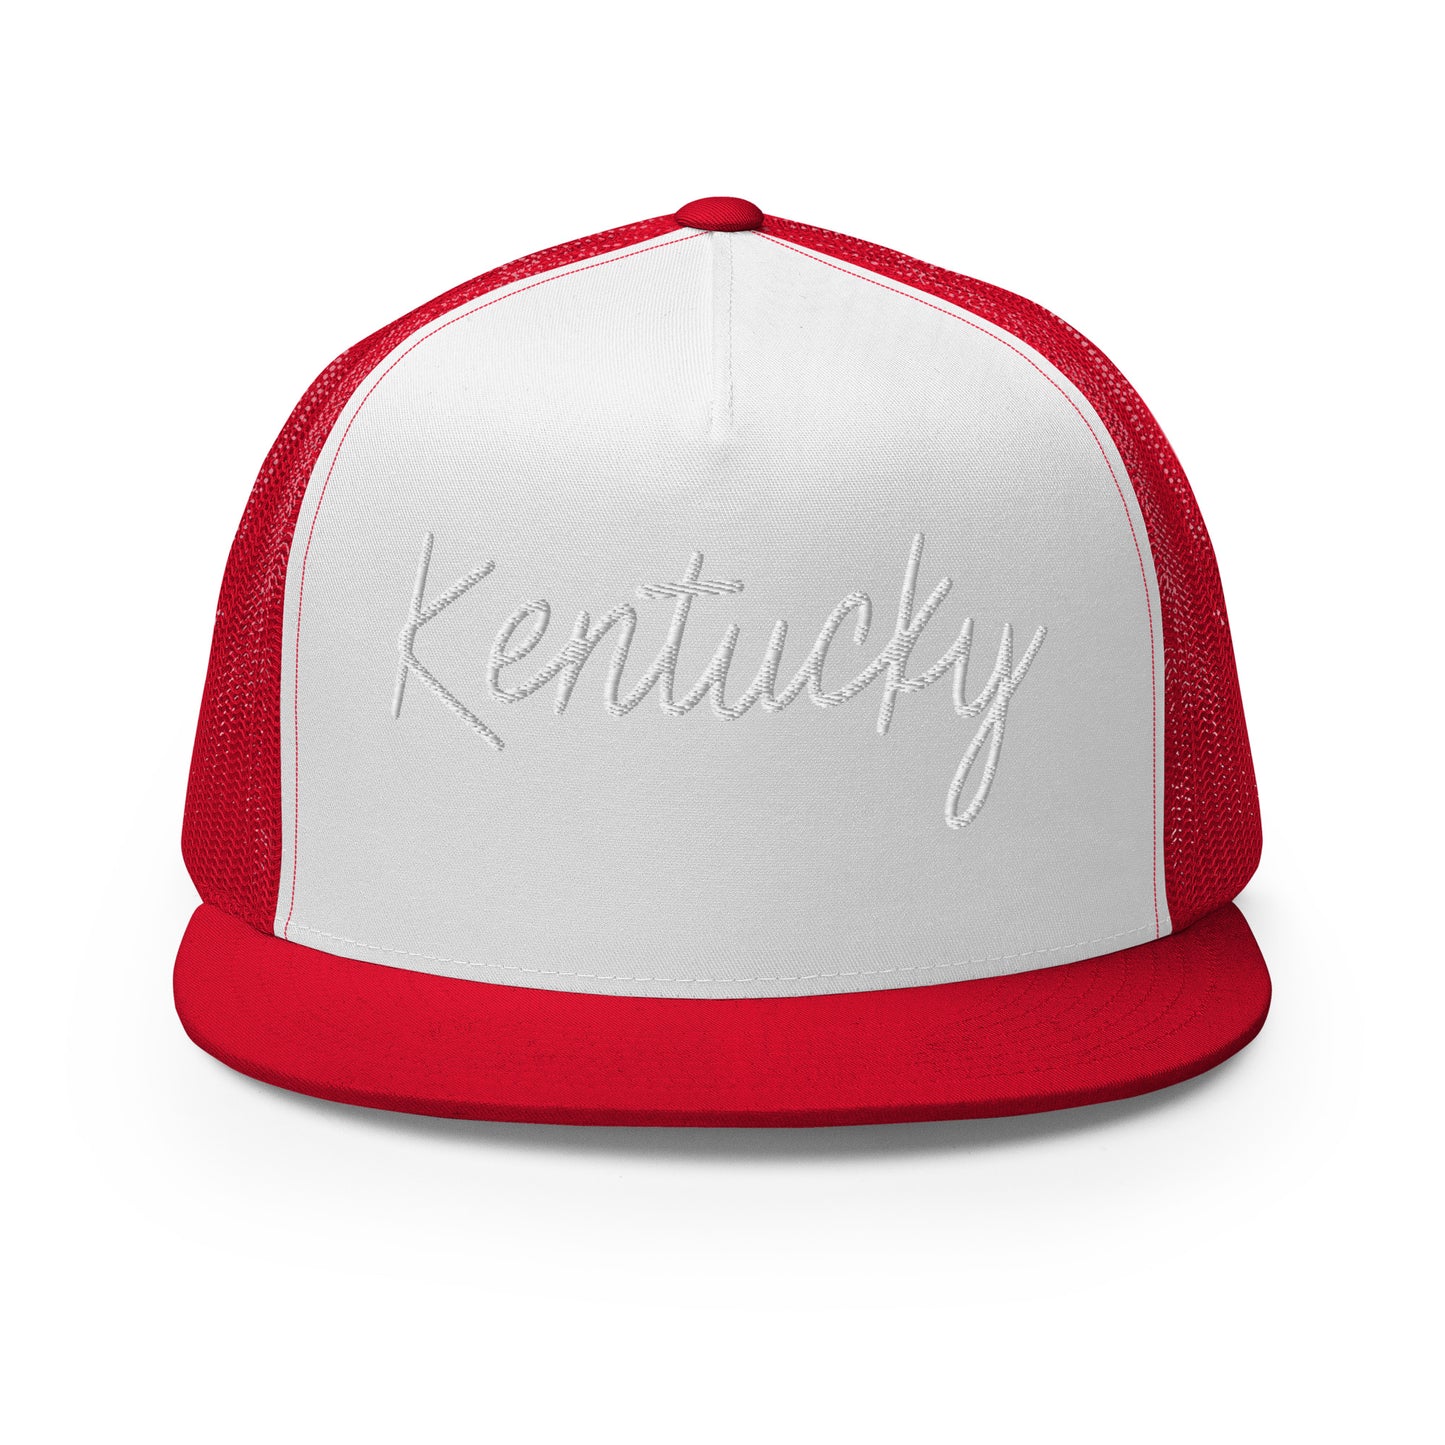 Kentucky Retro Script High 5 Panel A-Frame Snapback Trucker Hat